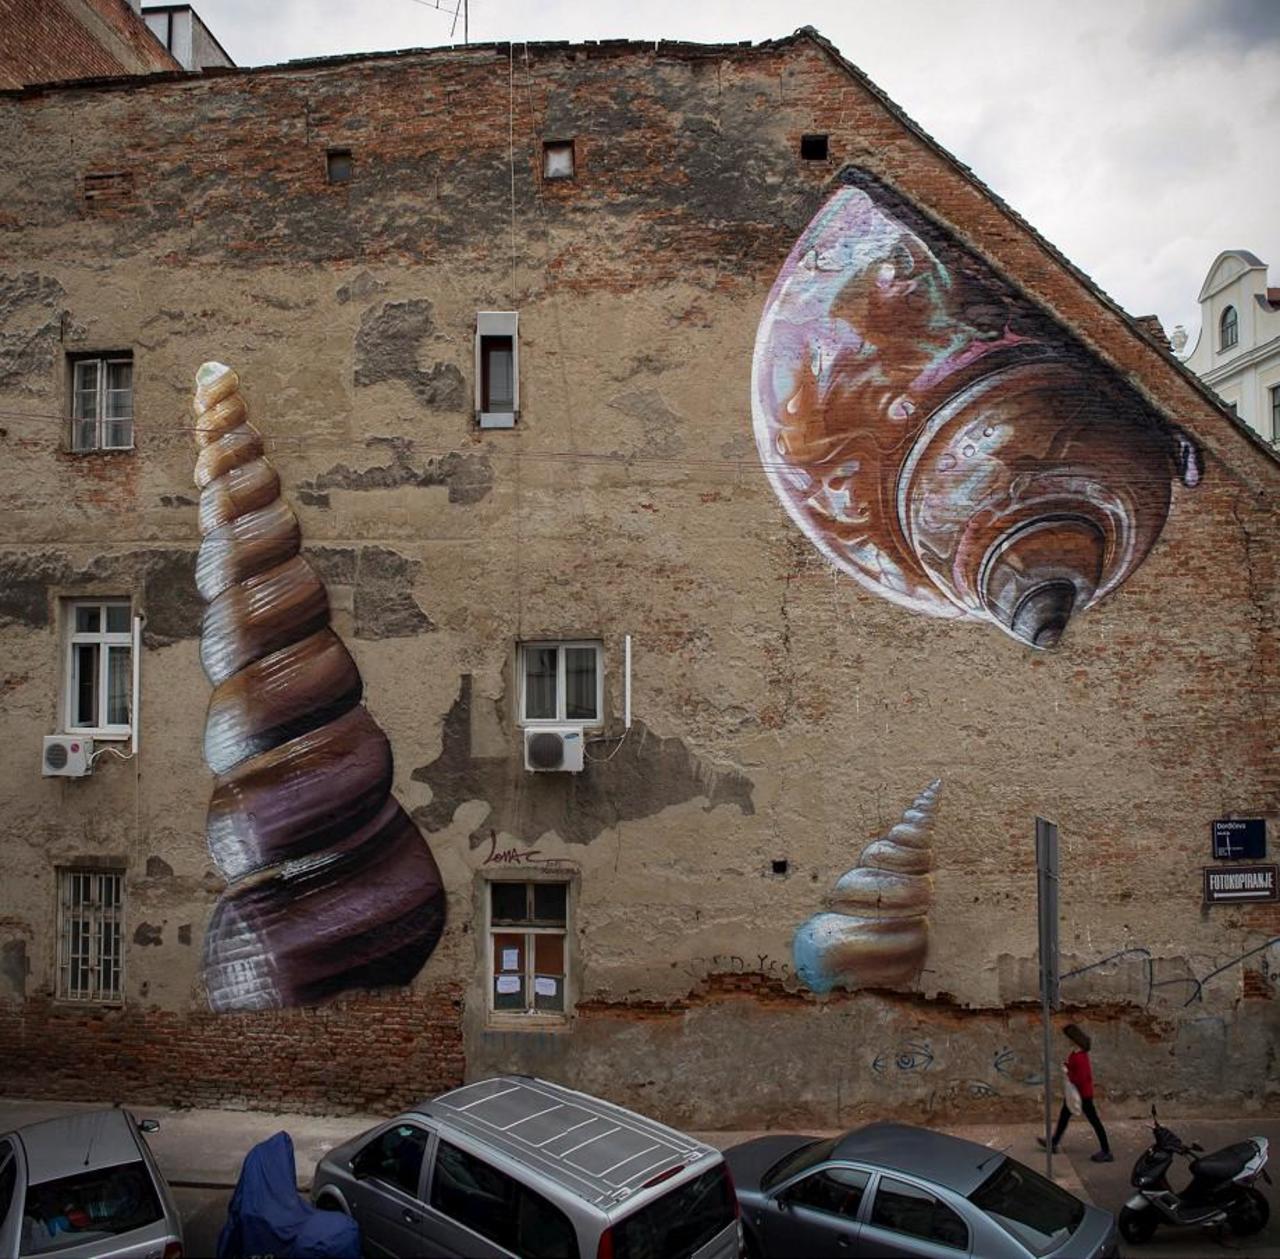 Lonac paints 'Xenophora' a new mural in Zagreb, Croatia. #StreetArt #Graffiti #Mural http://t.co/7FEtIJhRUT